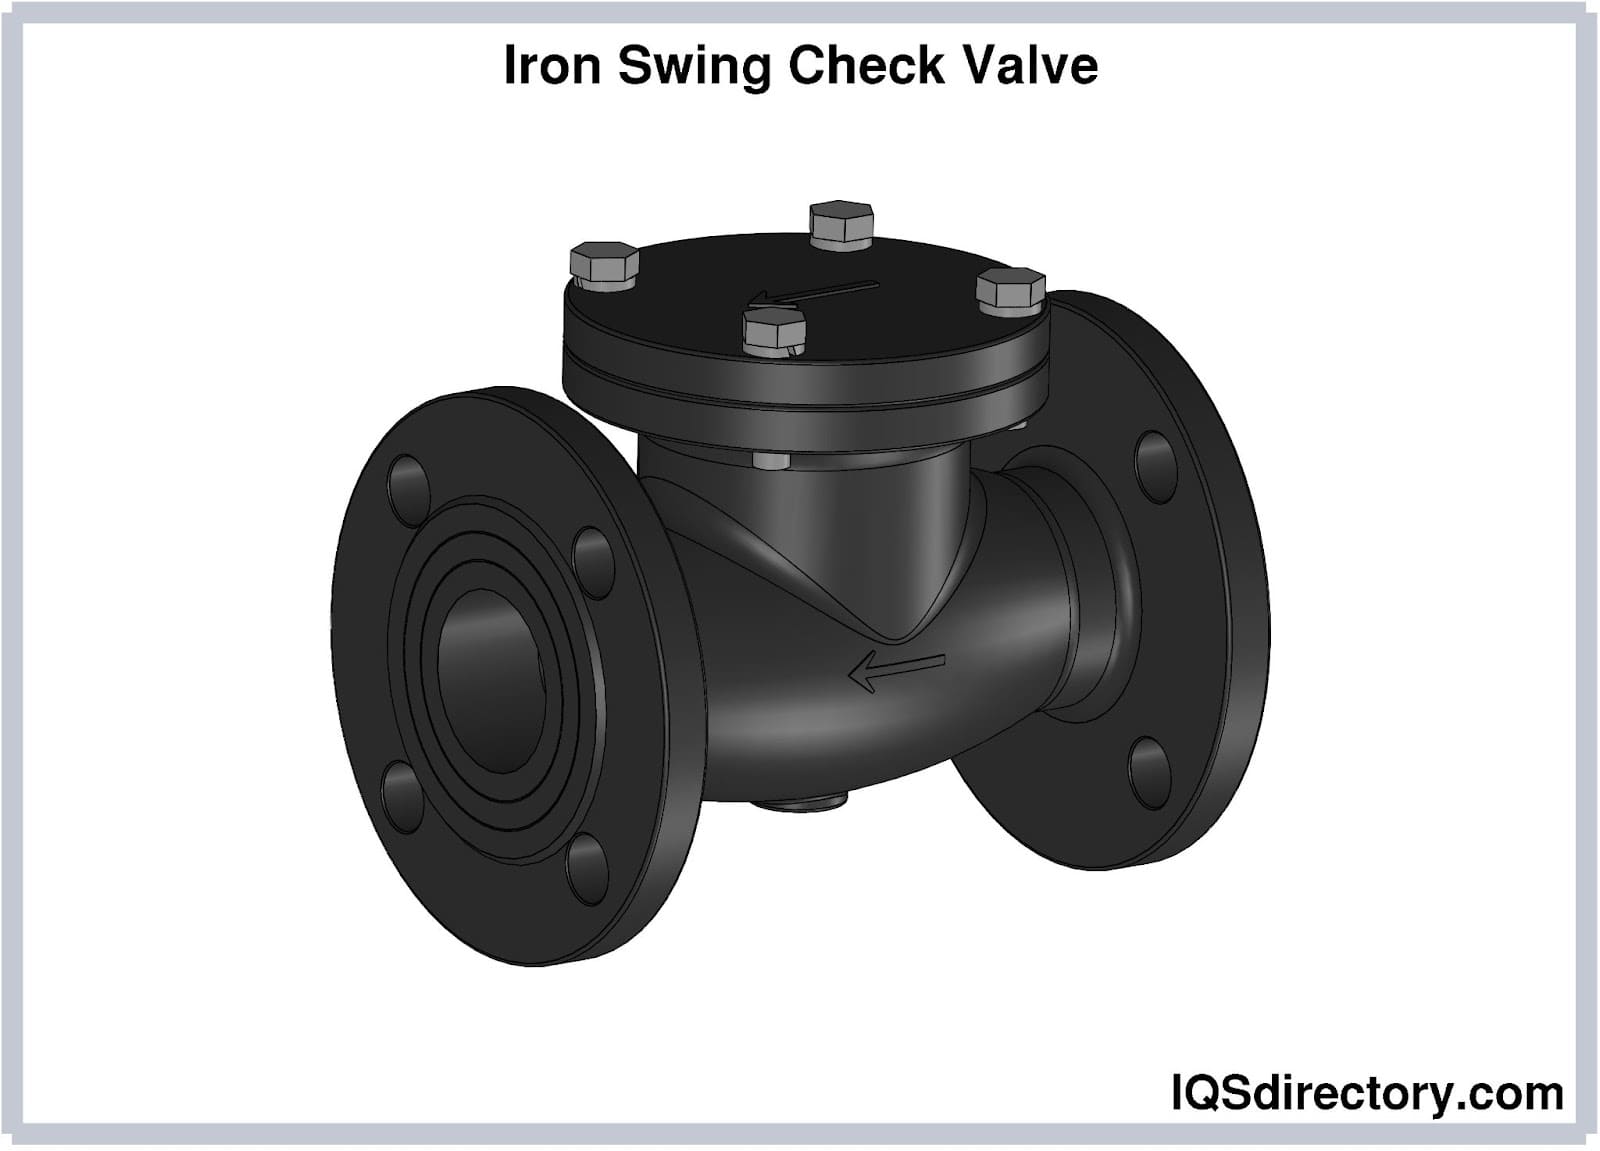 Iron Swing Check Valve